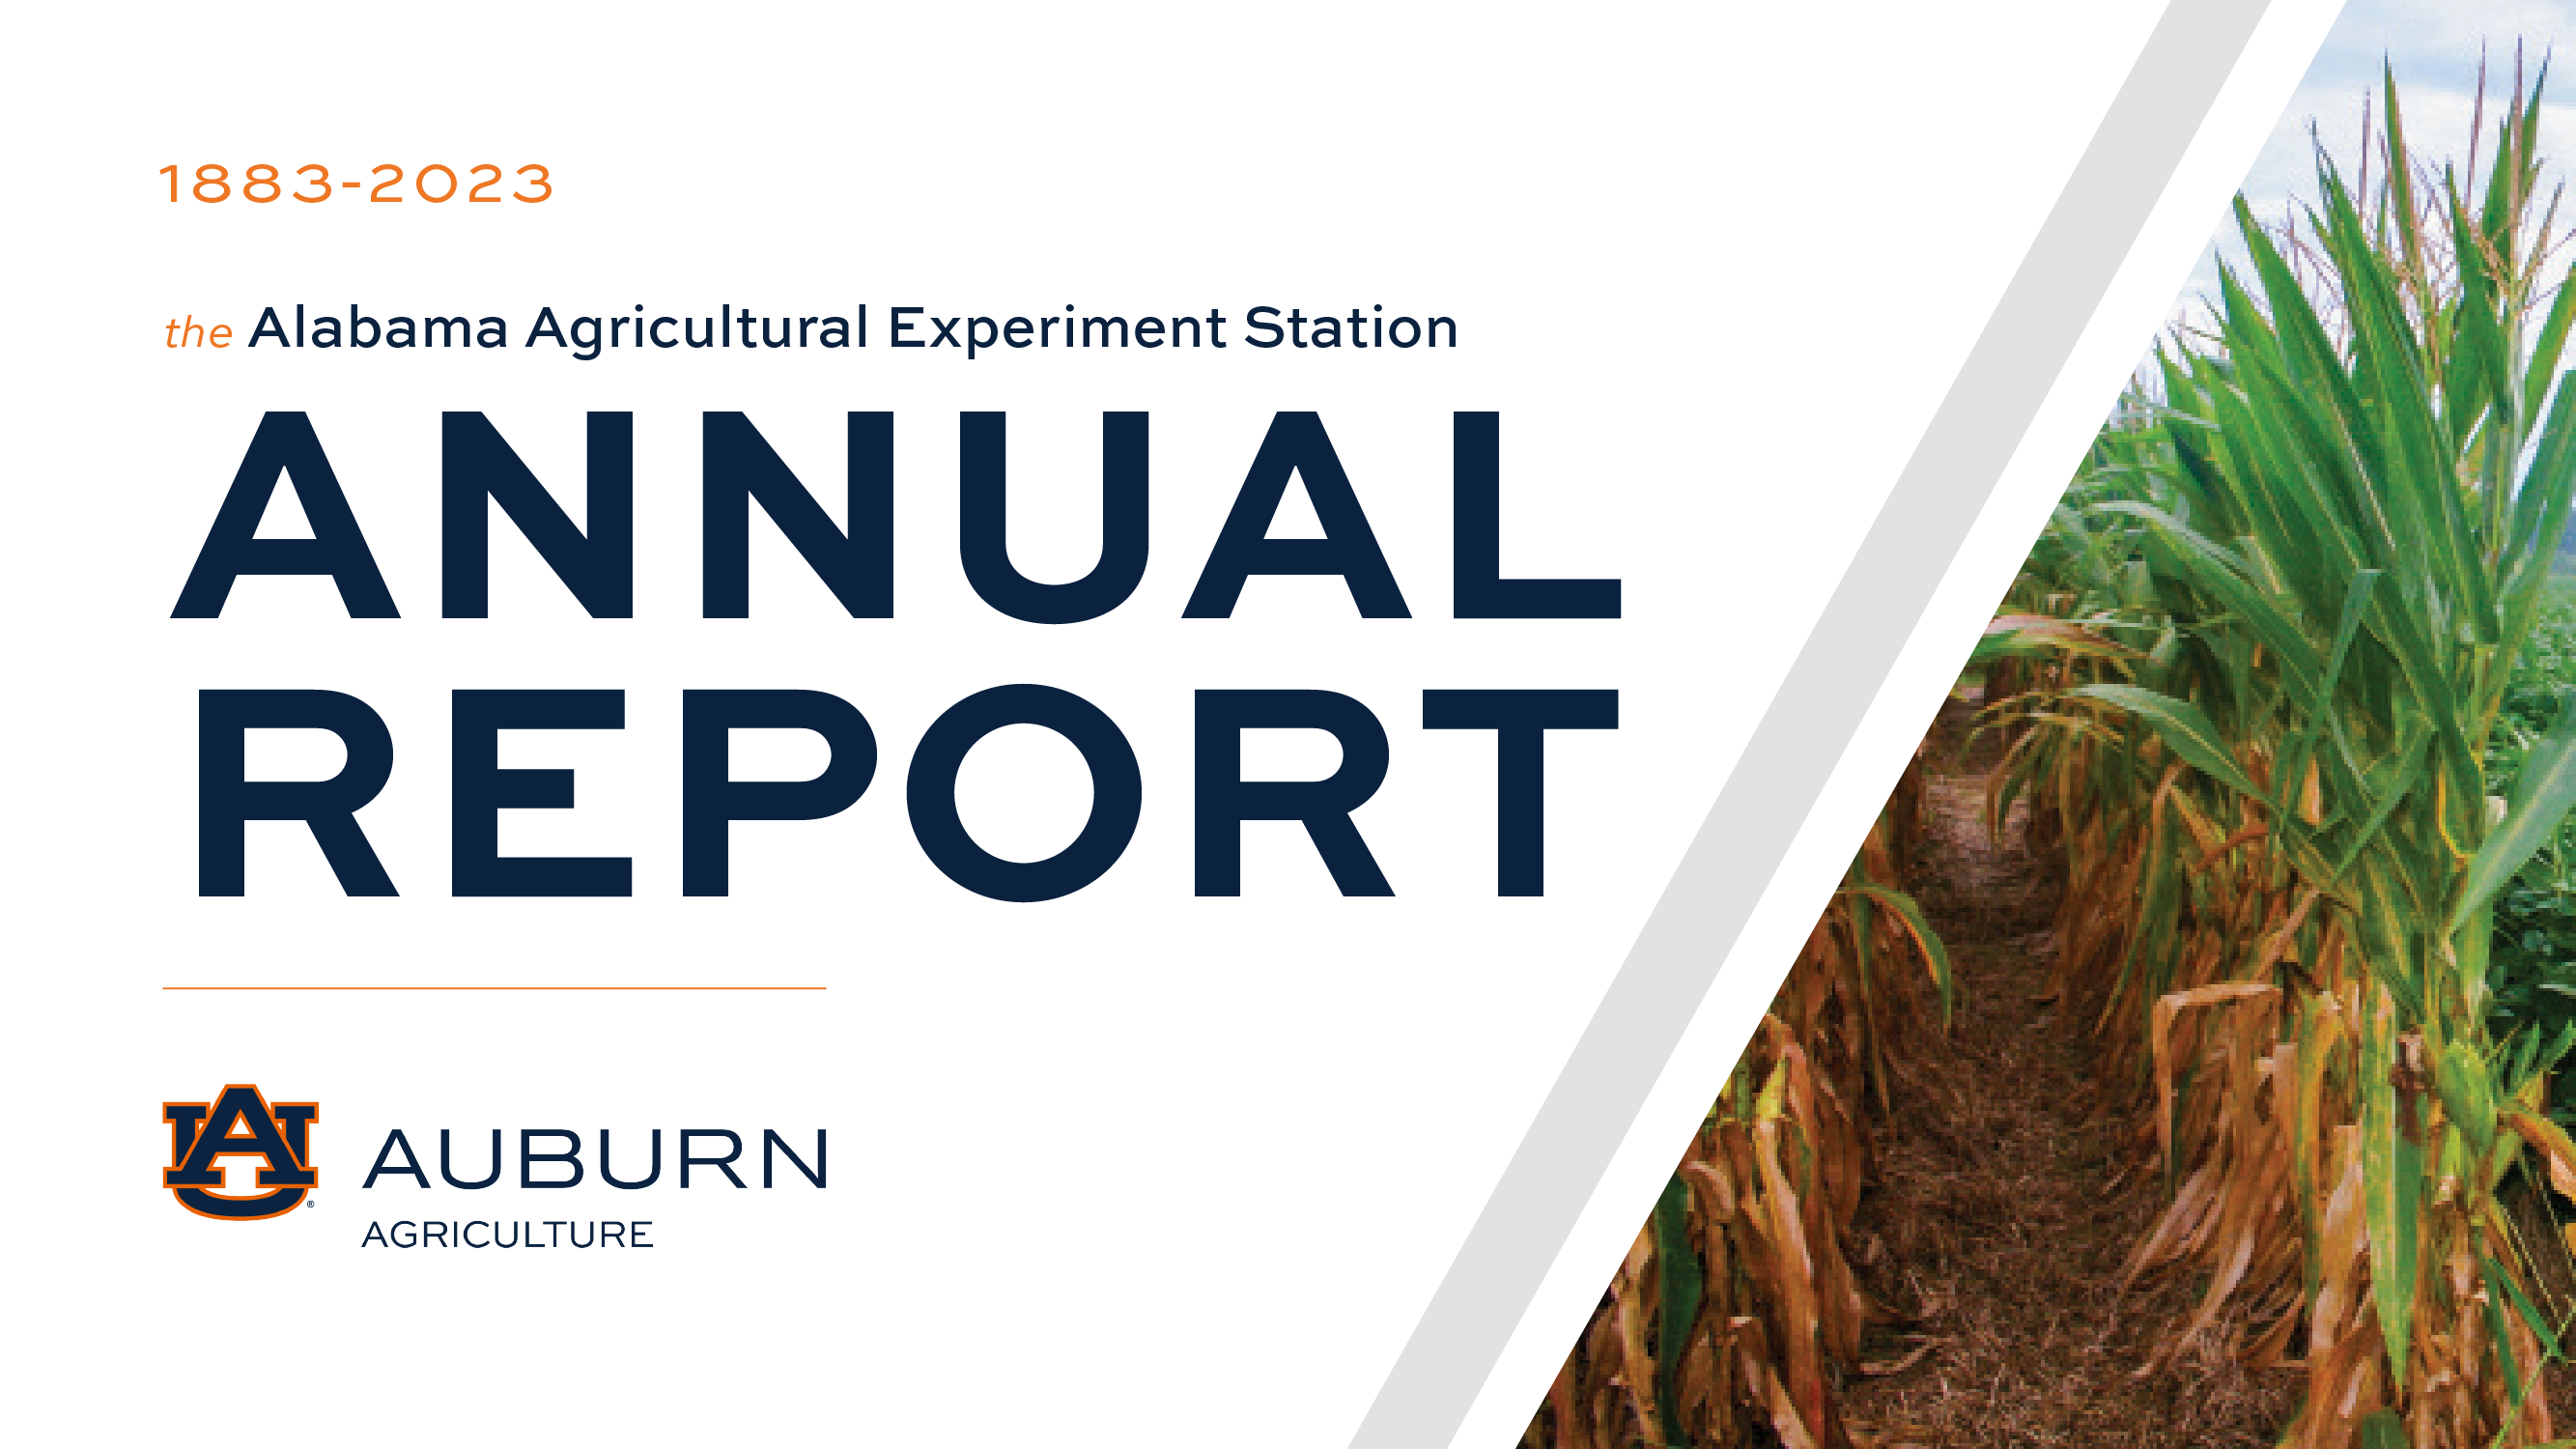 Auburn-Agriculture-Annual-Report-Image-2023